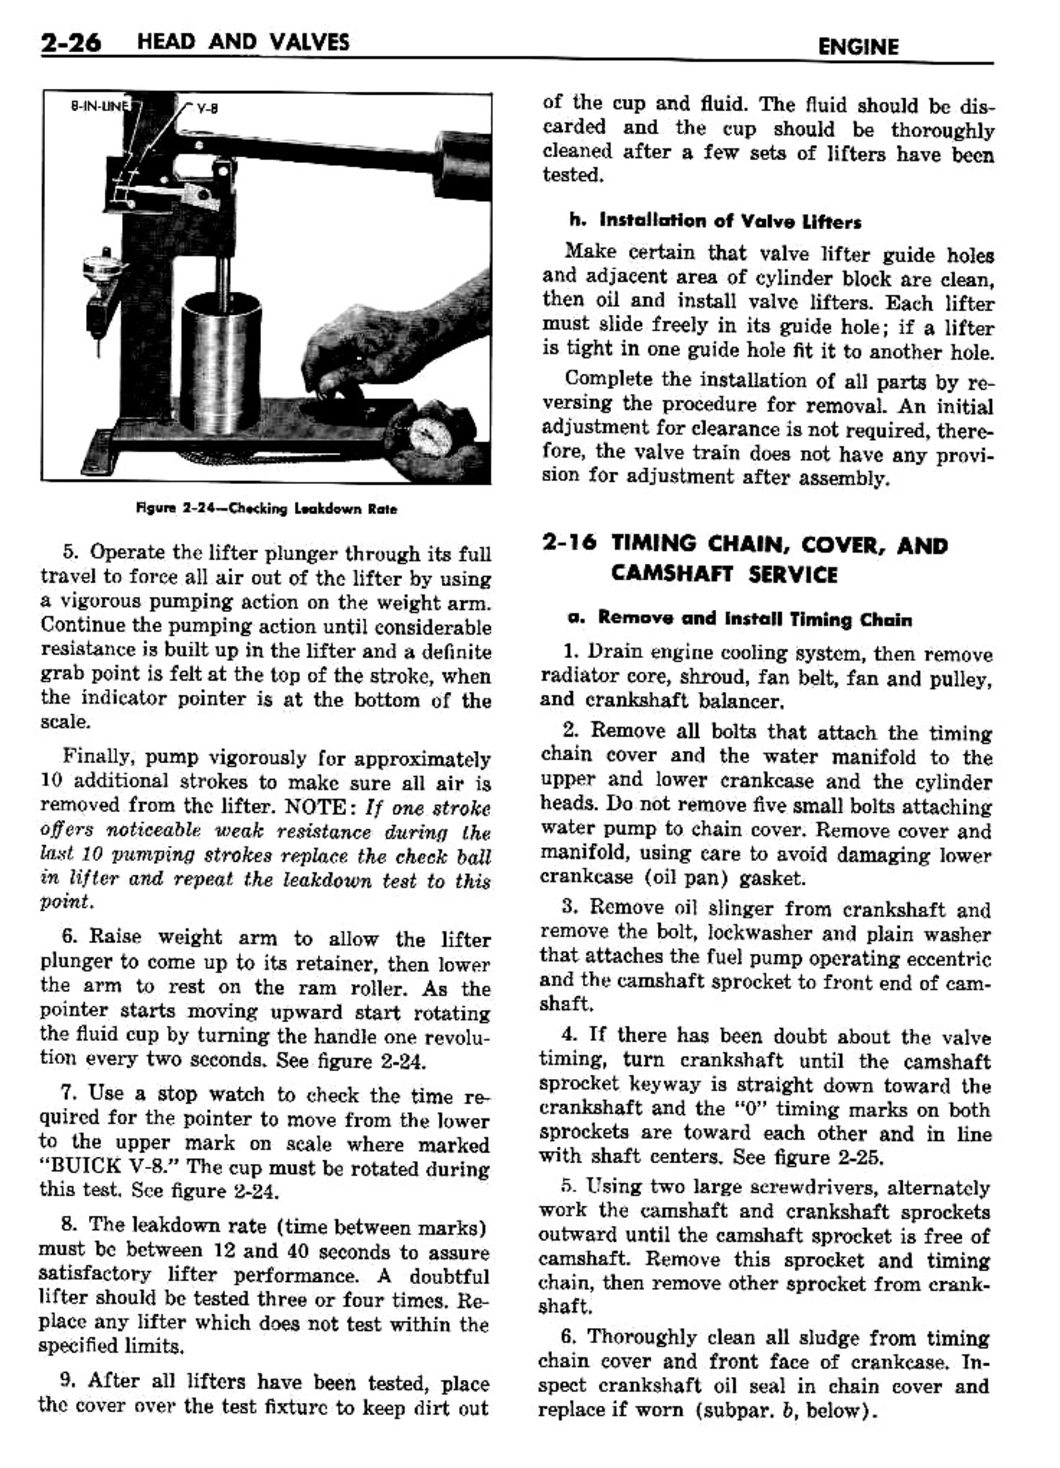 n_03 1957 Buick Shop Manual - Engine-026-026.jpg